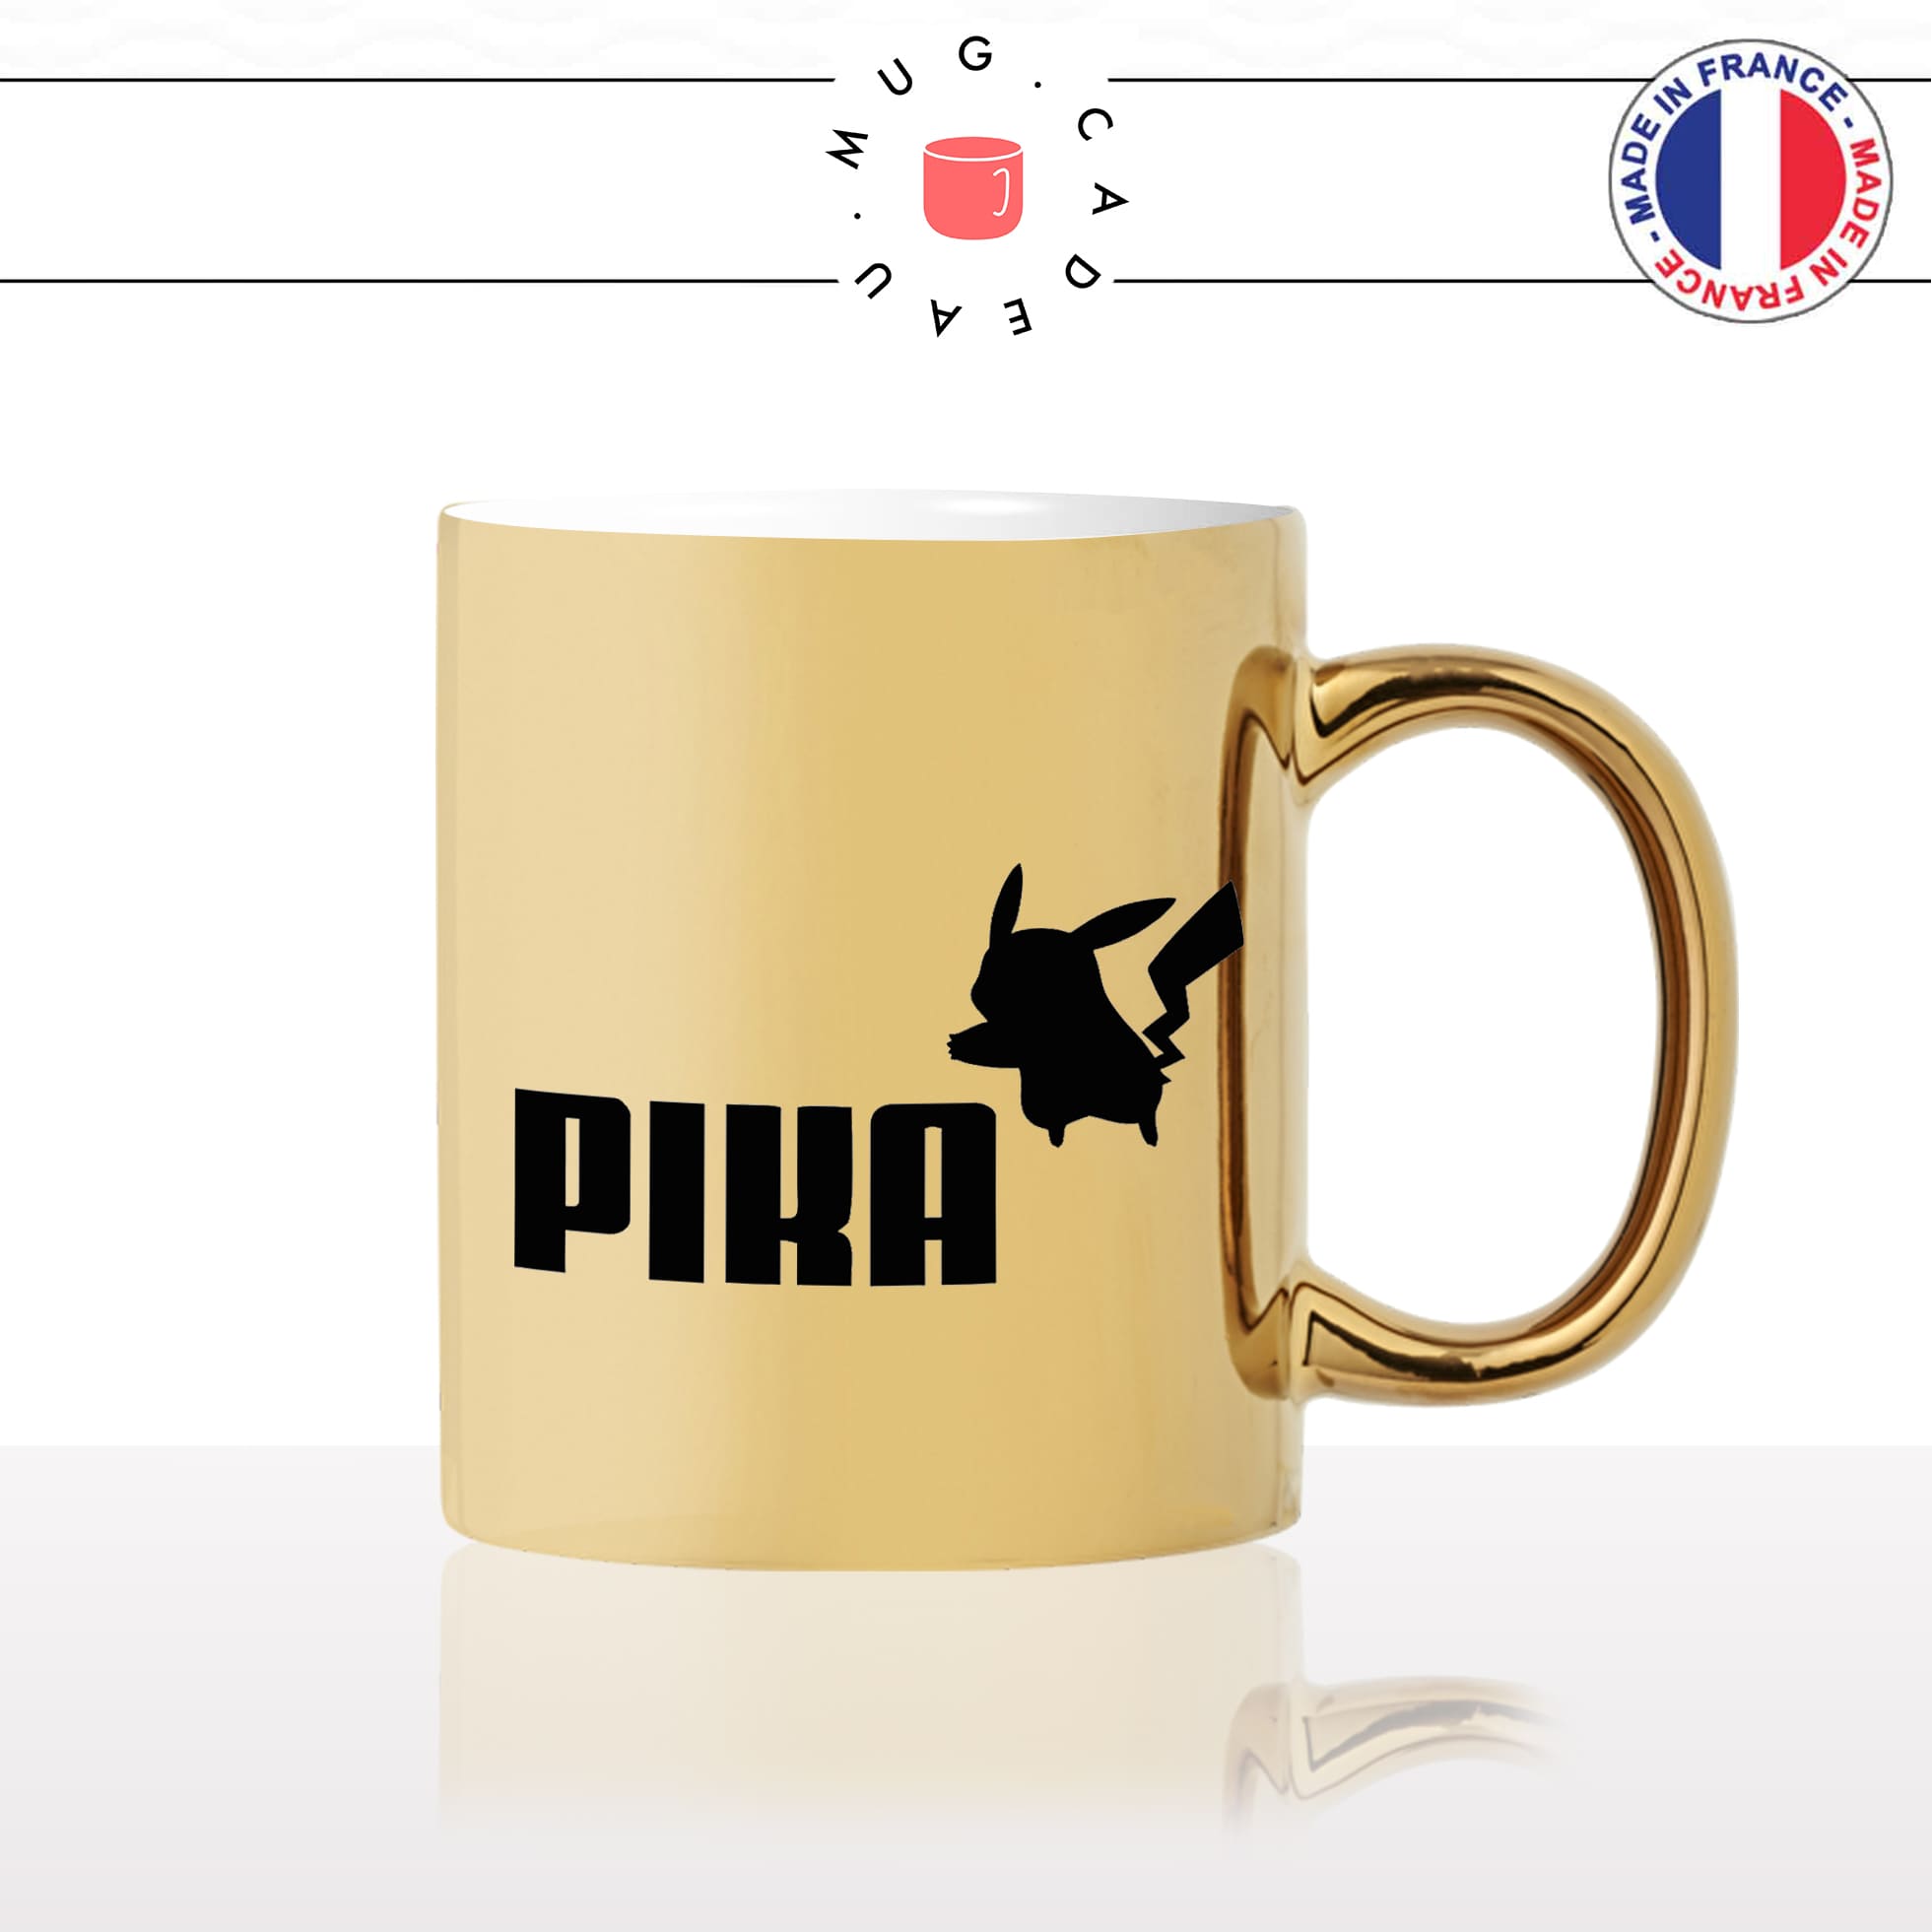 mug-tasse-or-doré-gold-unique-pika-puma-marque-animal-homme-femme-parodie-humour-fun-cool-idée-cadeau-original-personnalisé2